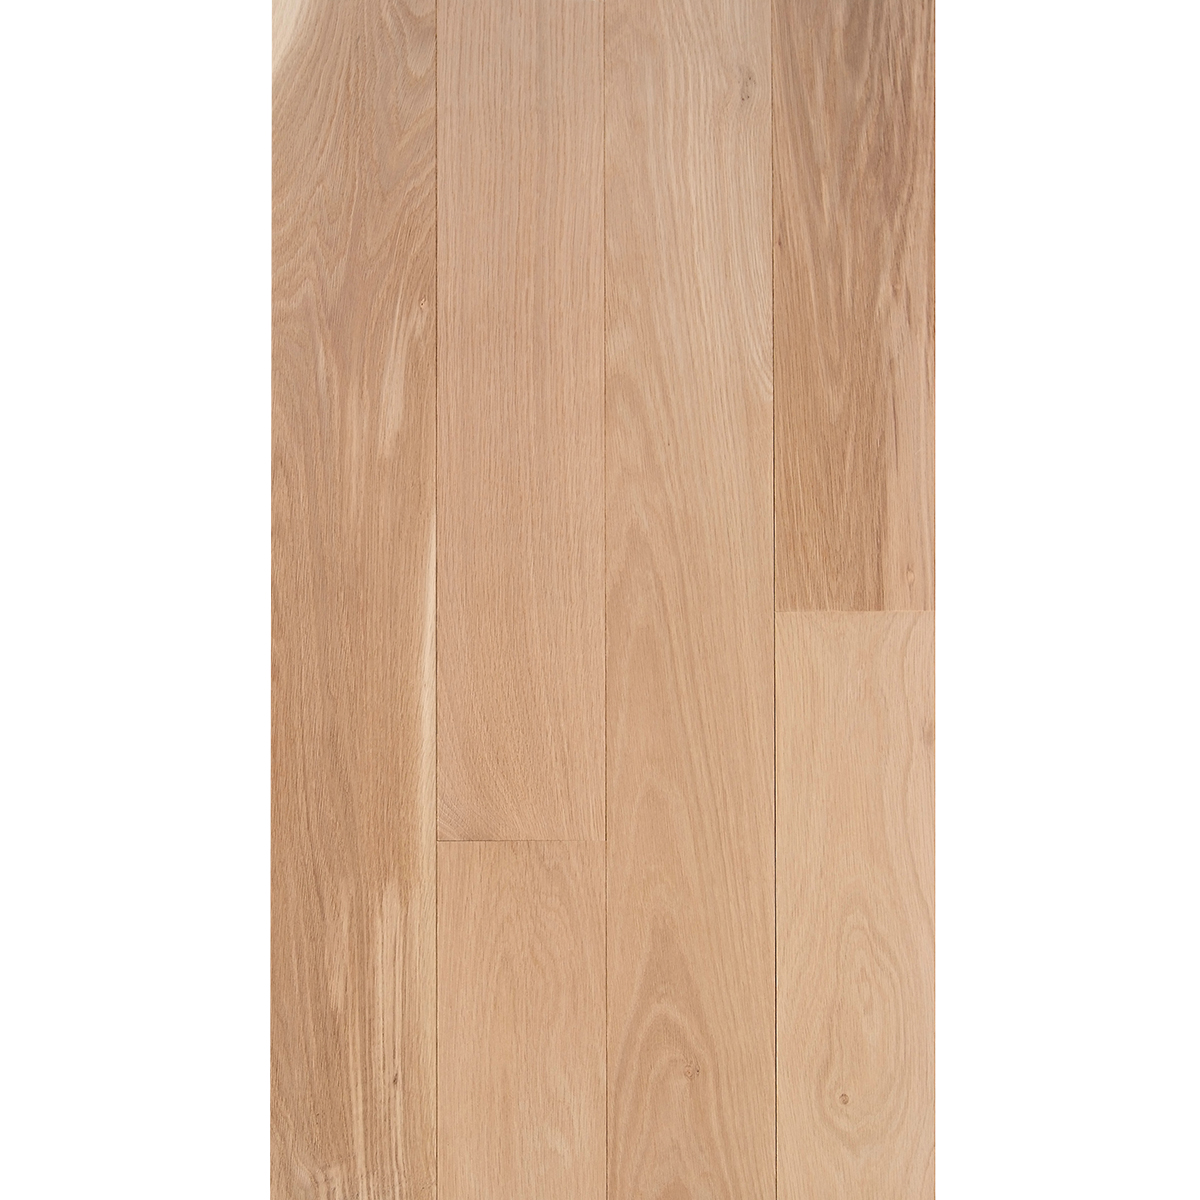 White Oak 3 4 X 5 Select Grade Flooring